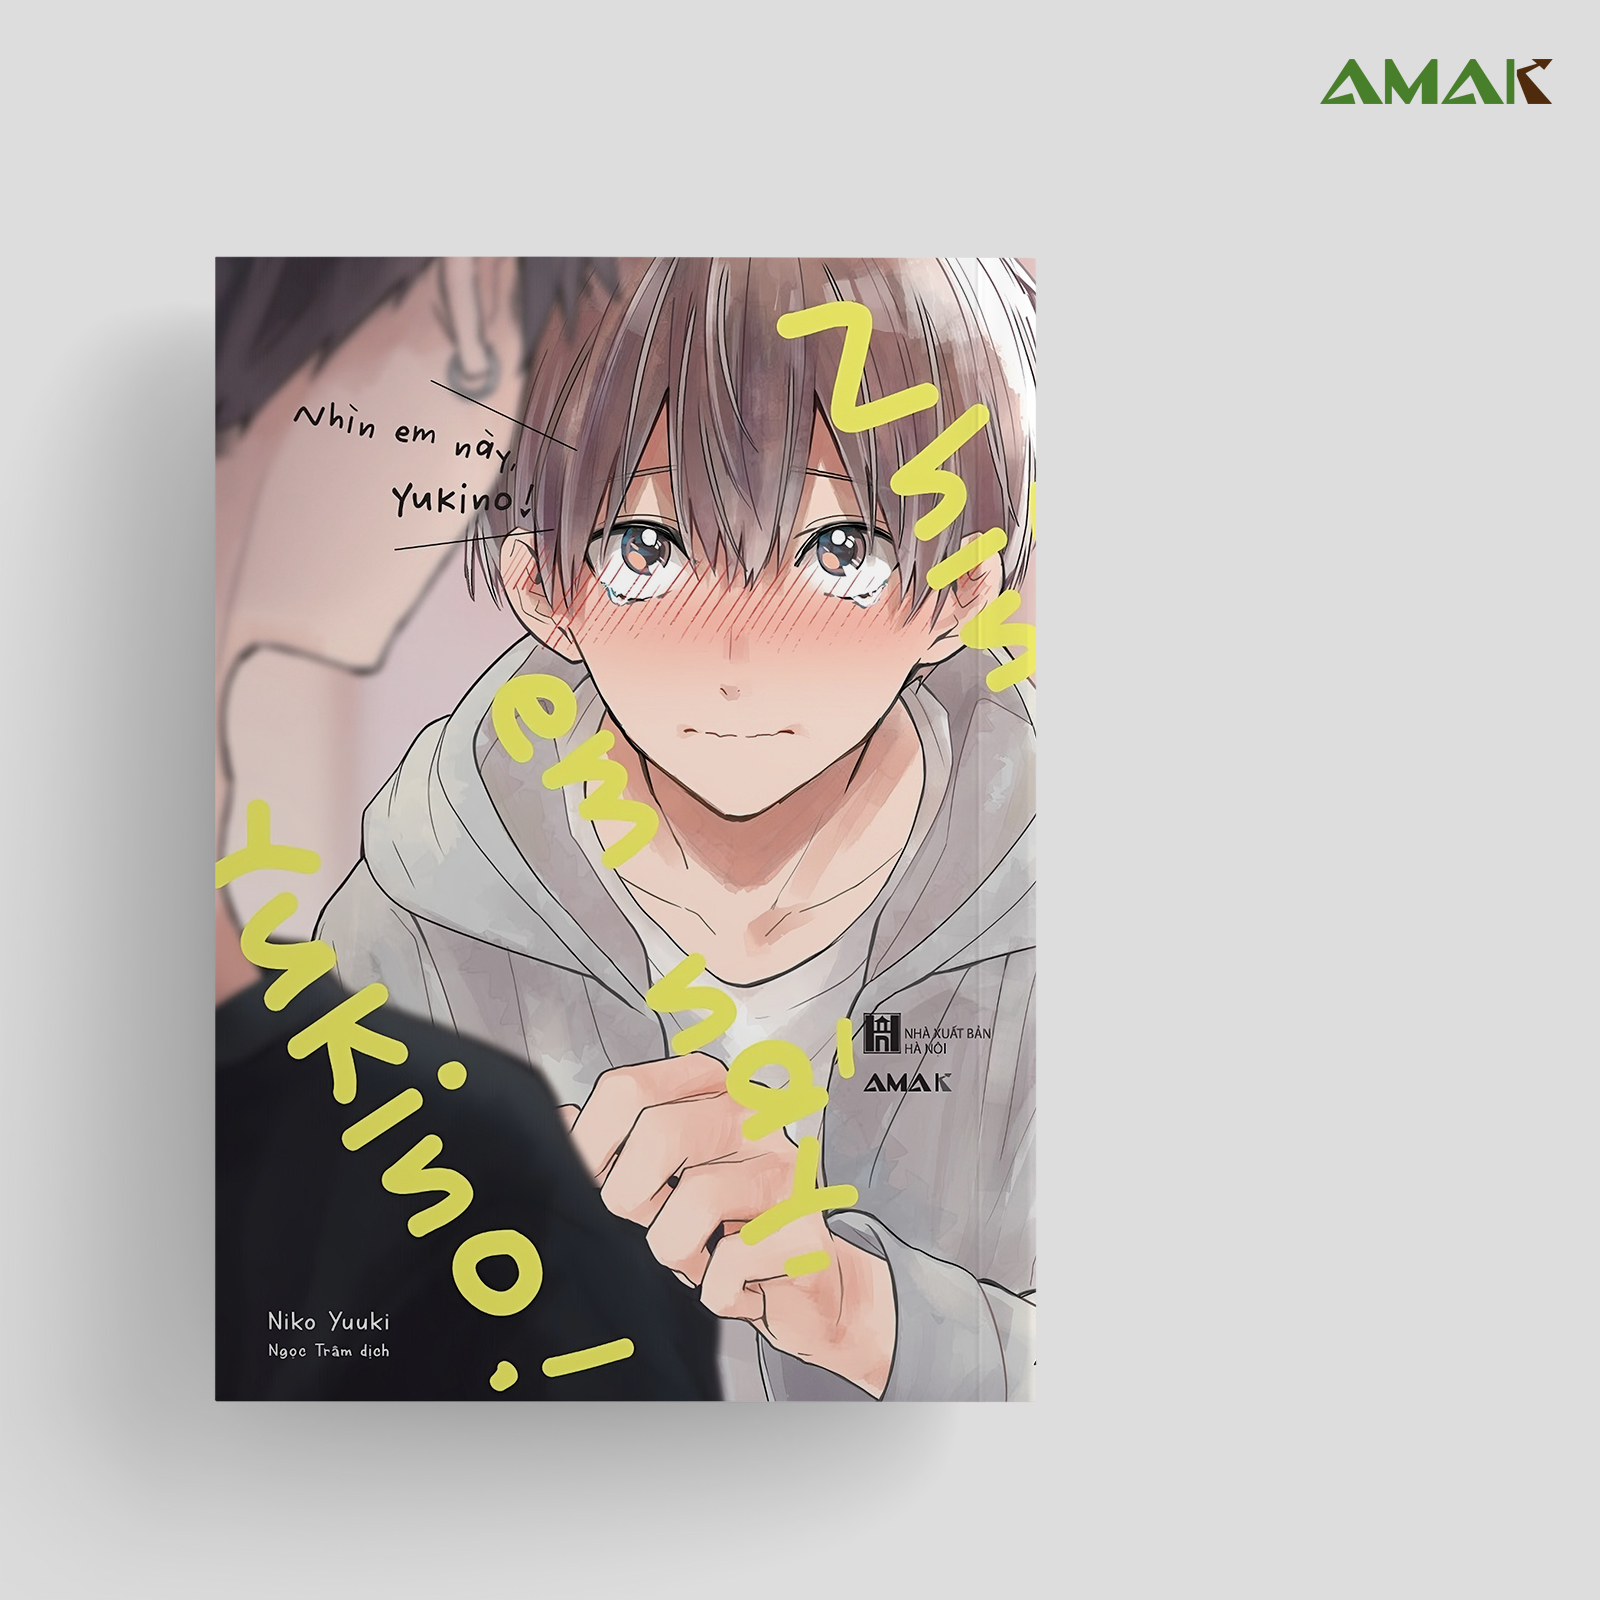 [Manga] Nhìn Em Này, Yukino! - Amakbooks